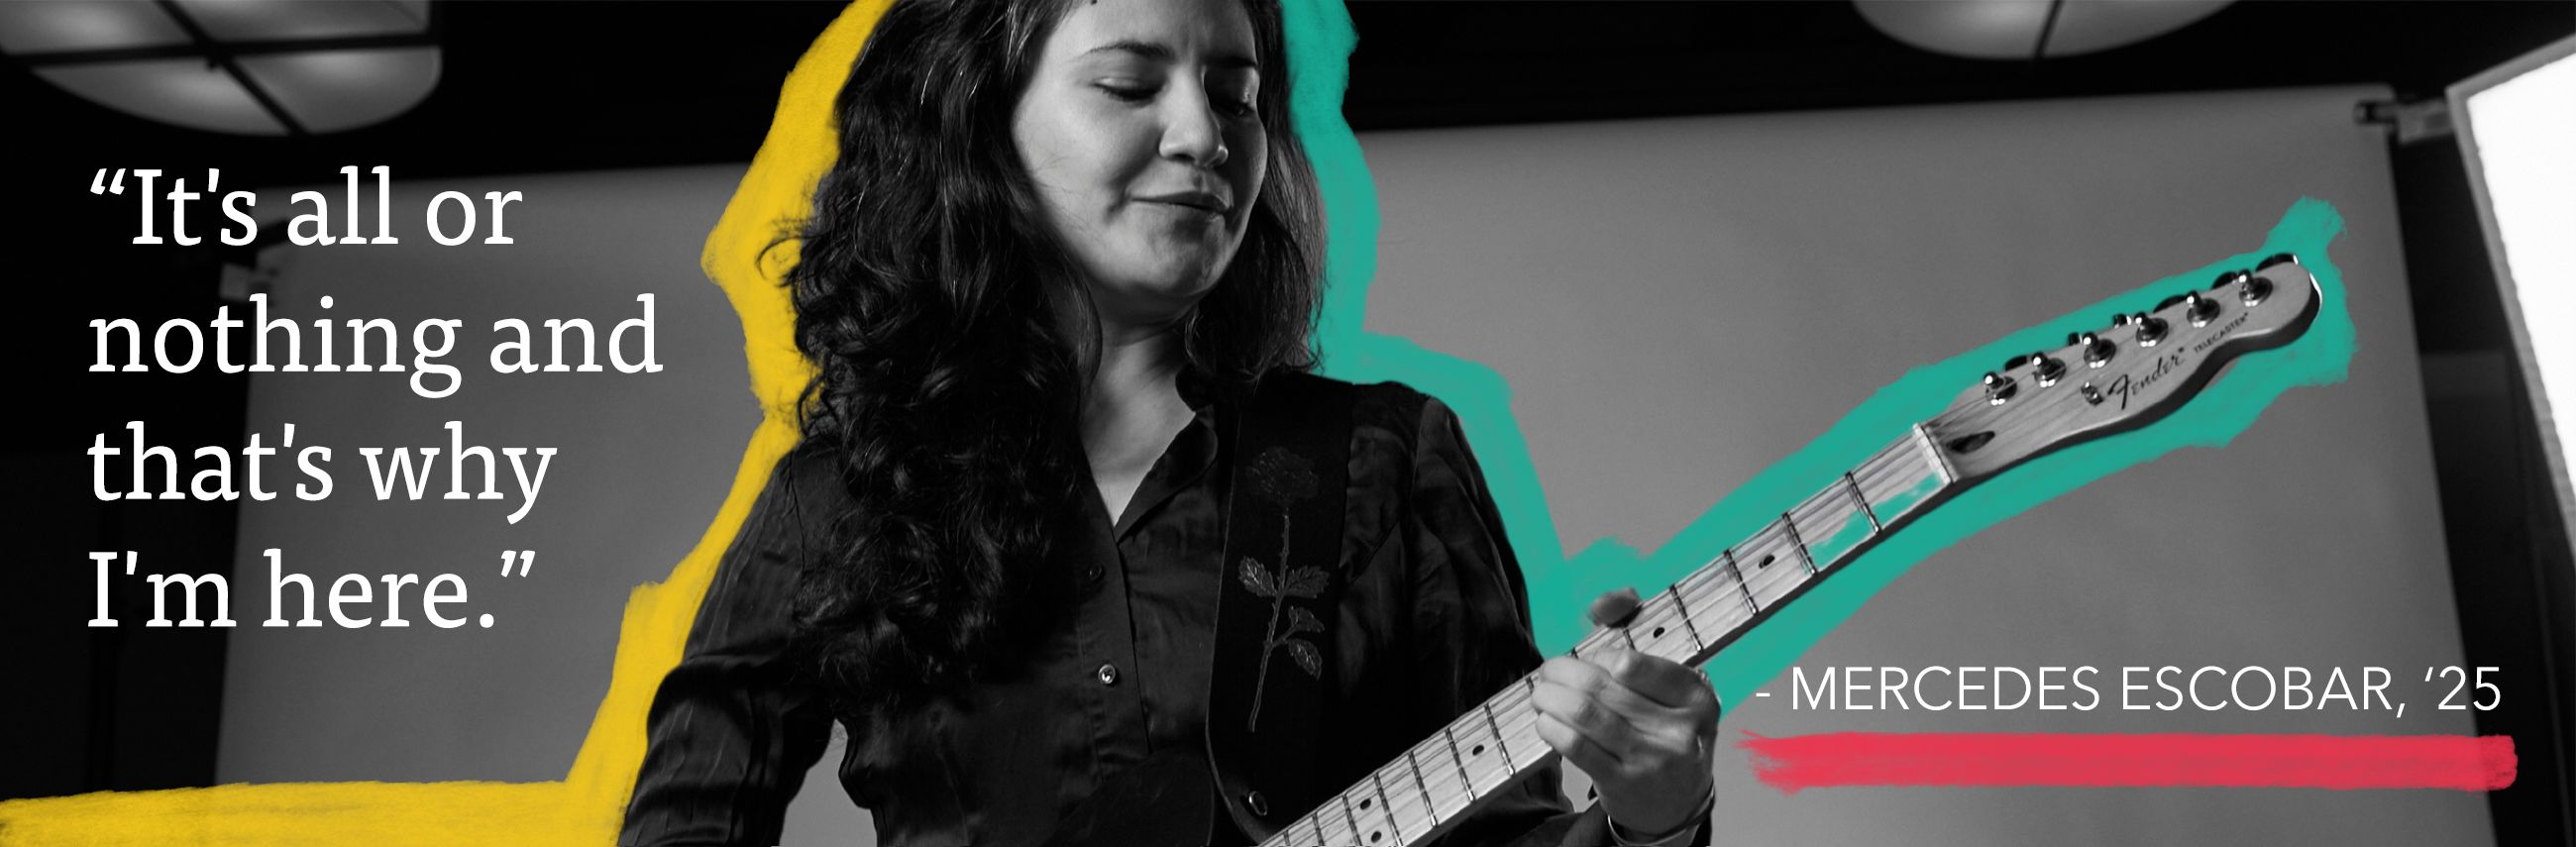 Berklee student Mercedes Escobar plays guitar